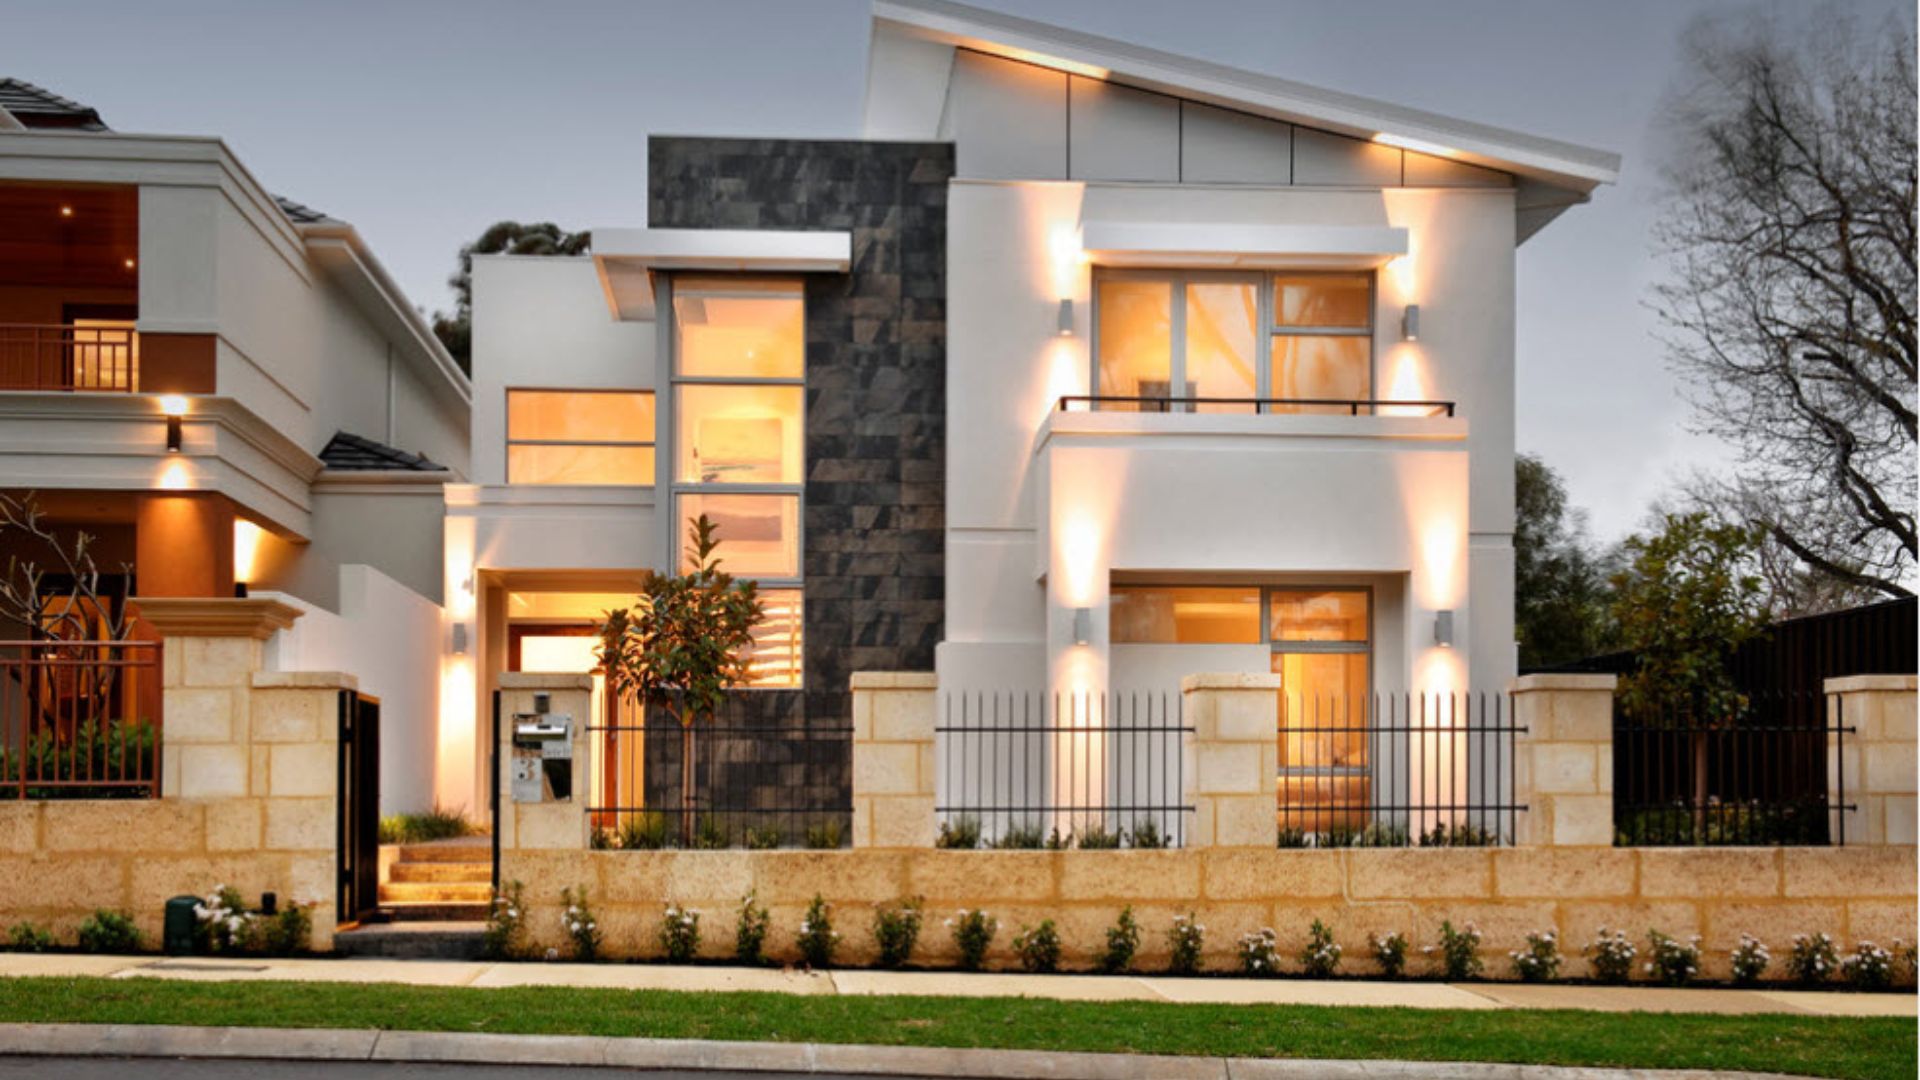 Guidelines for Proper Lighting Design in Residential Facades